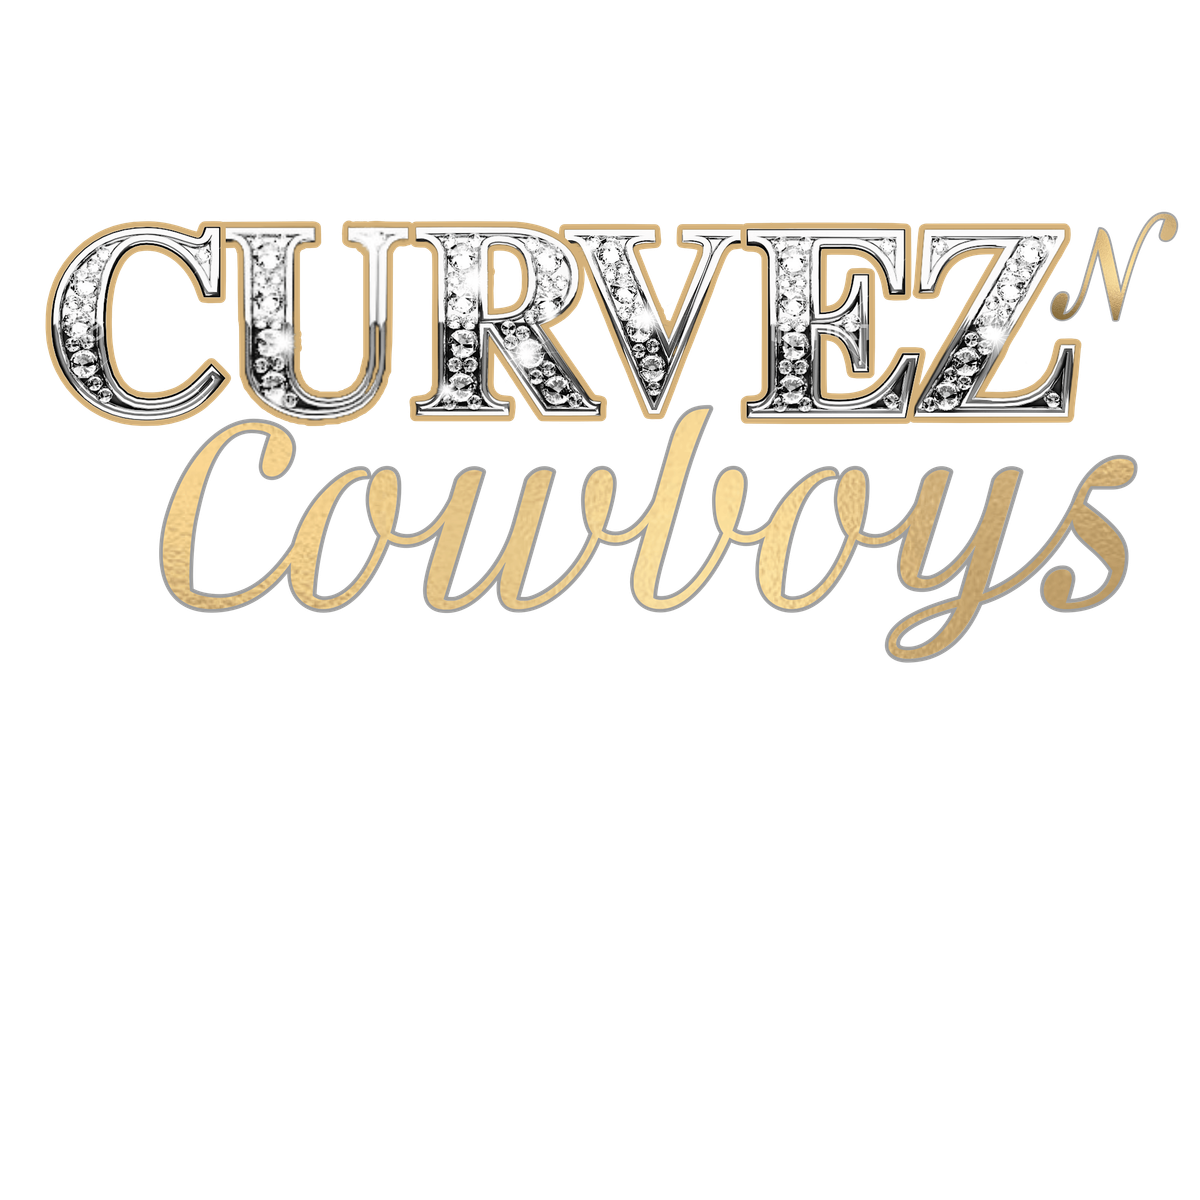 Curvez N' Cowboyz Day Party